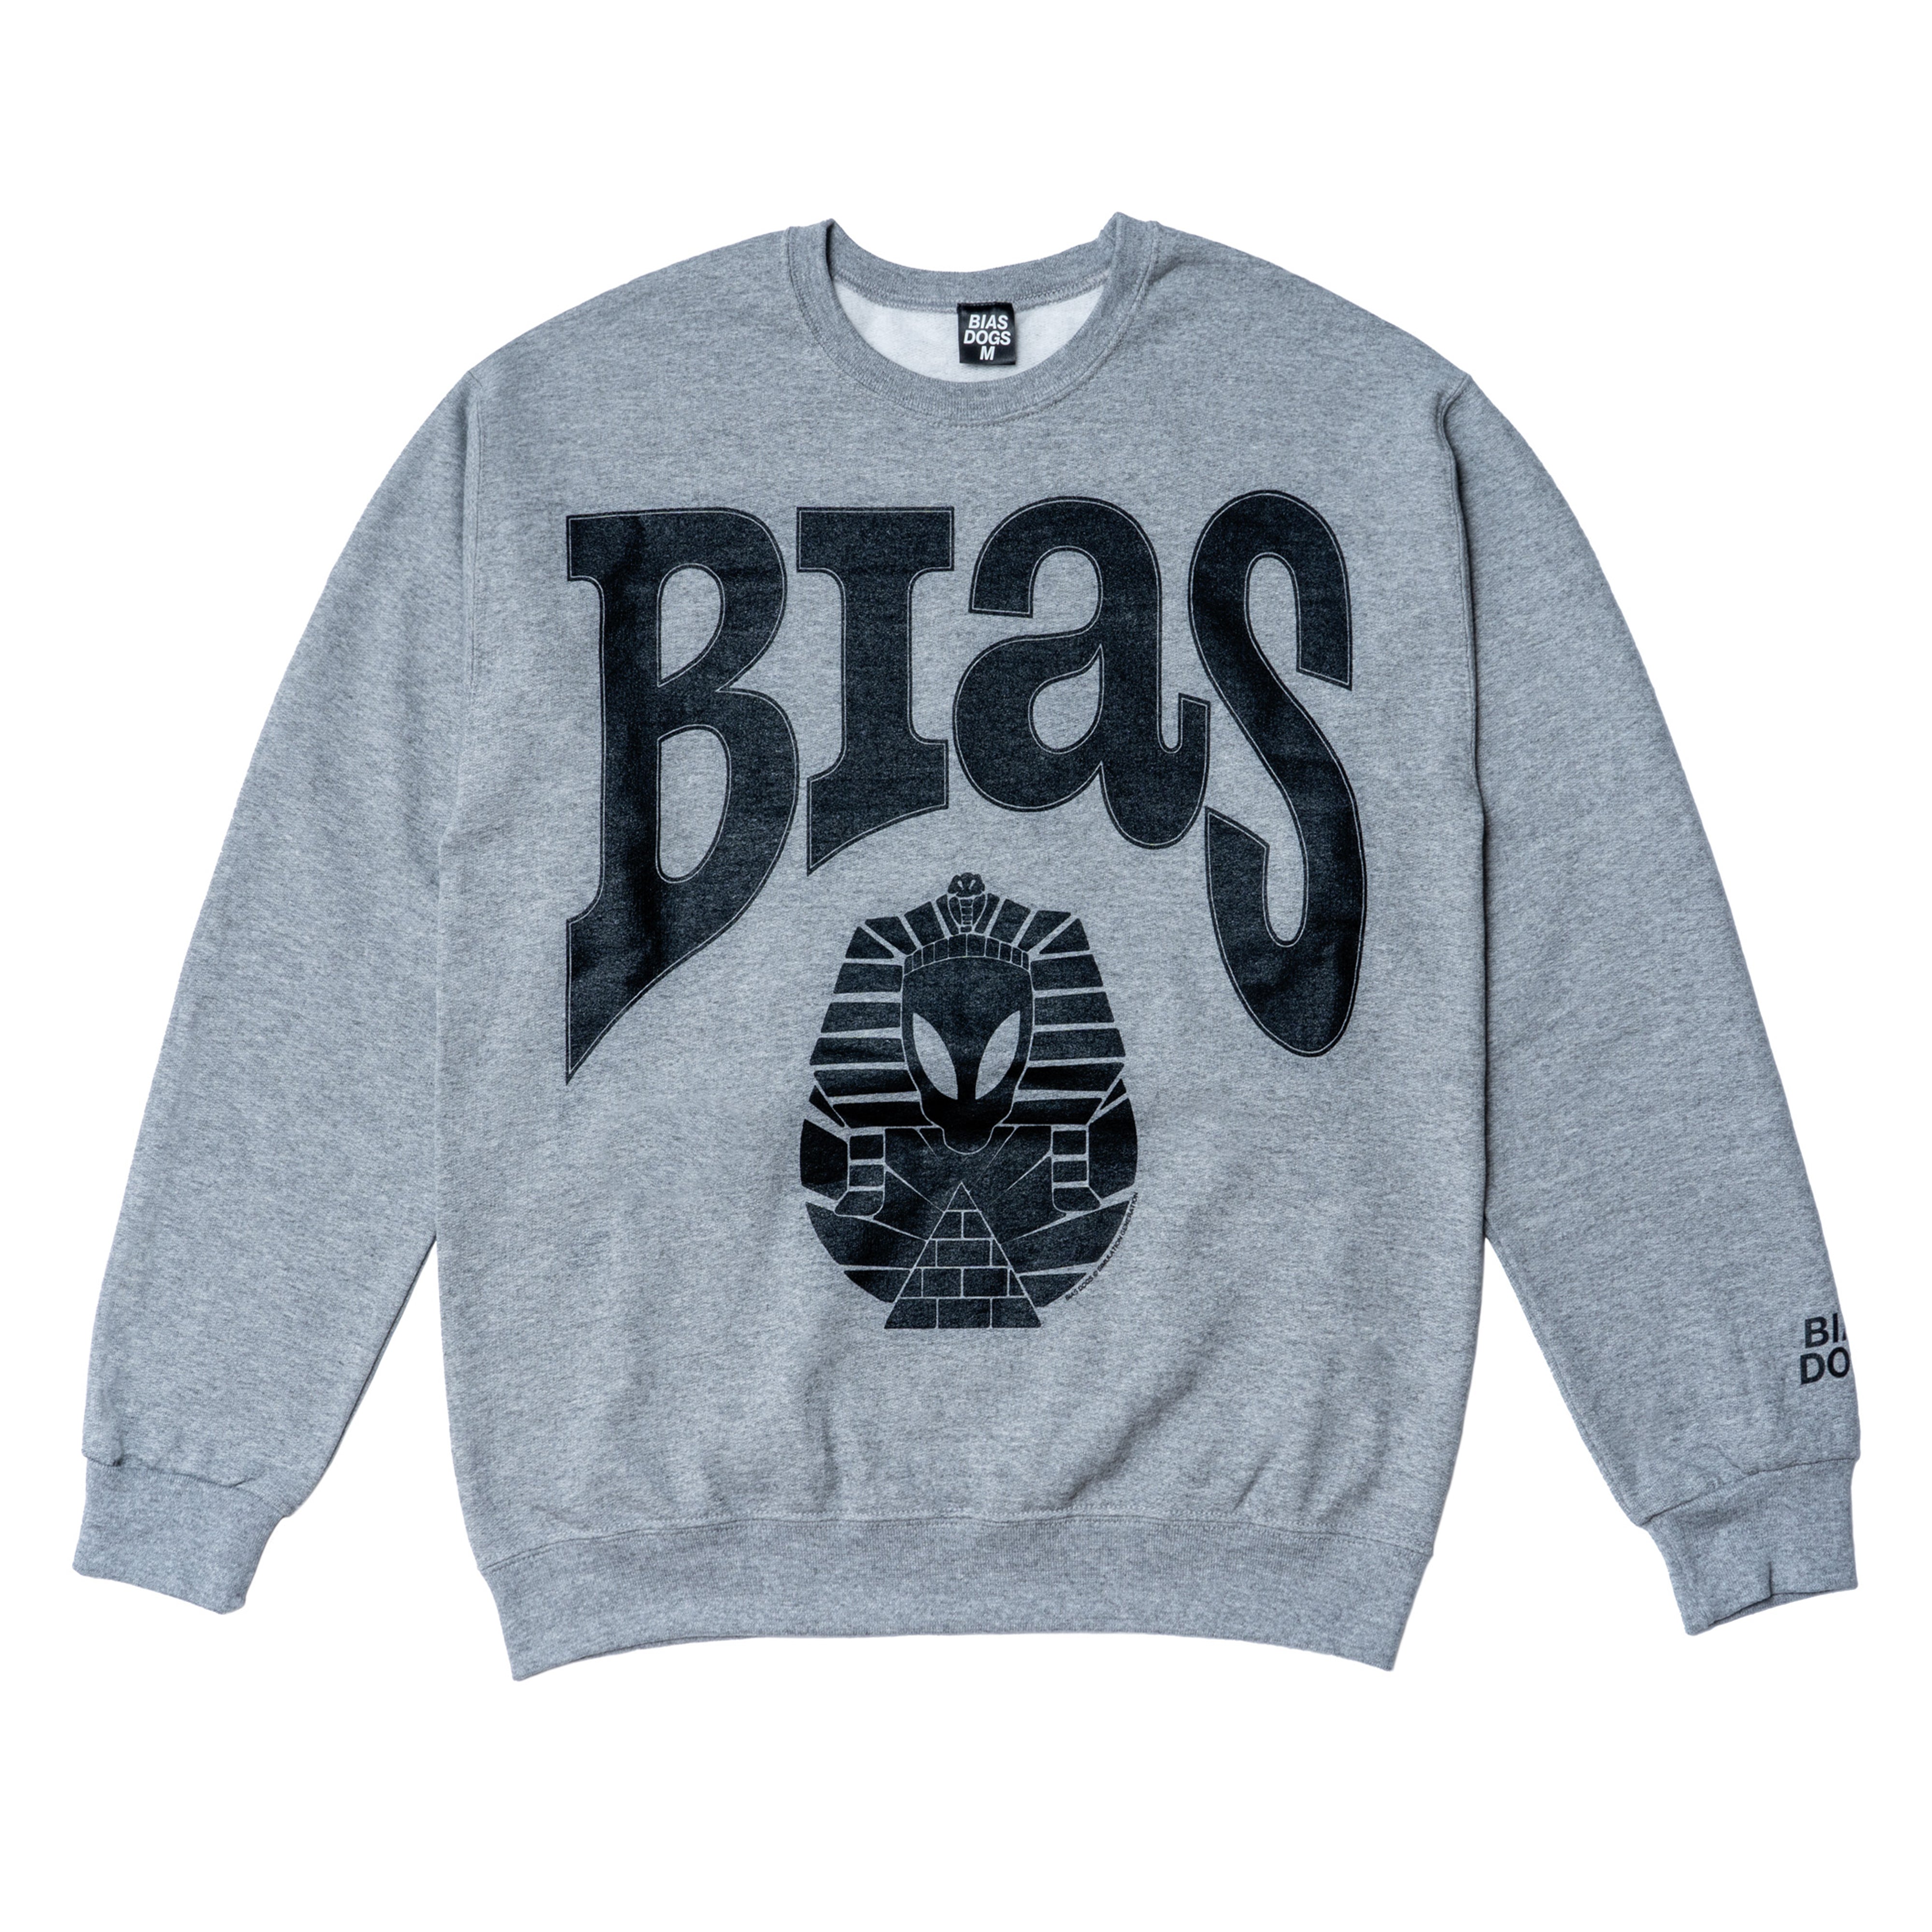 Bias Dogs - Men's Caution Sweatshirt - (Grey)